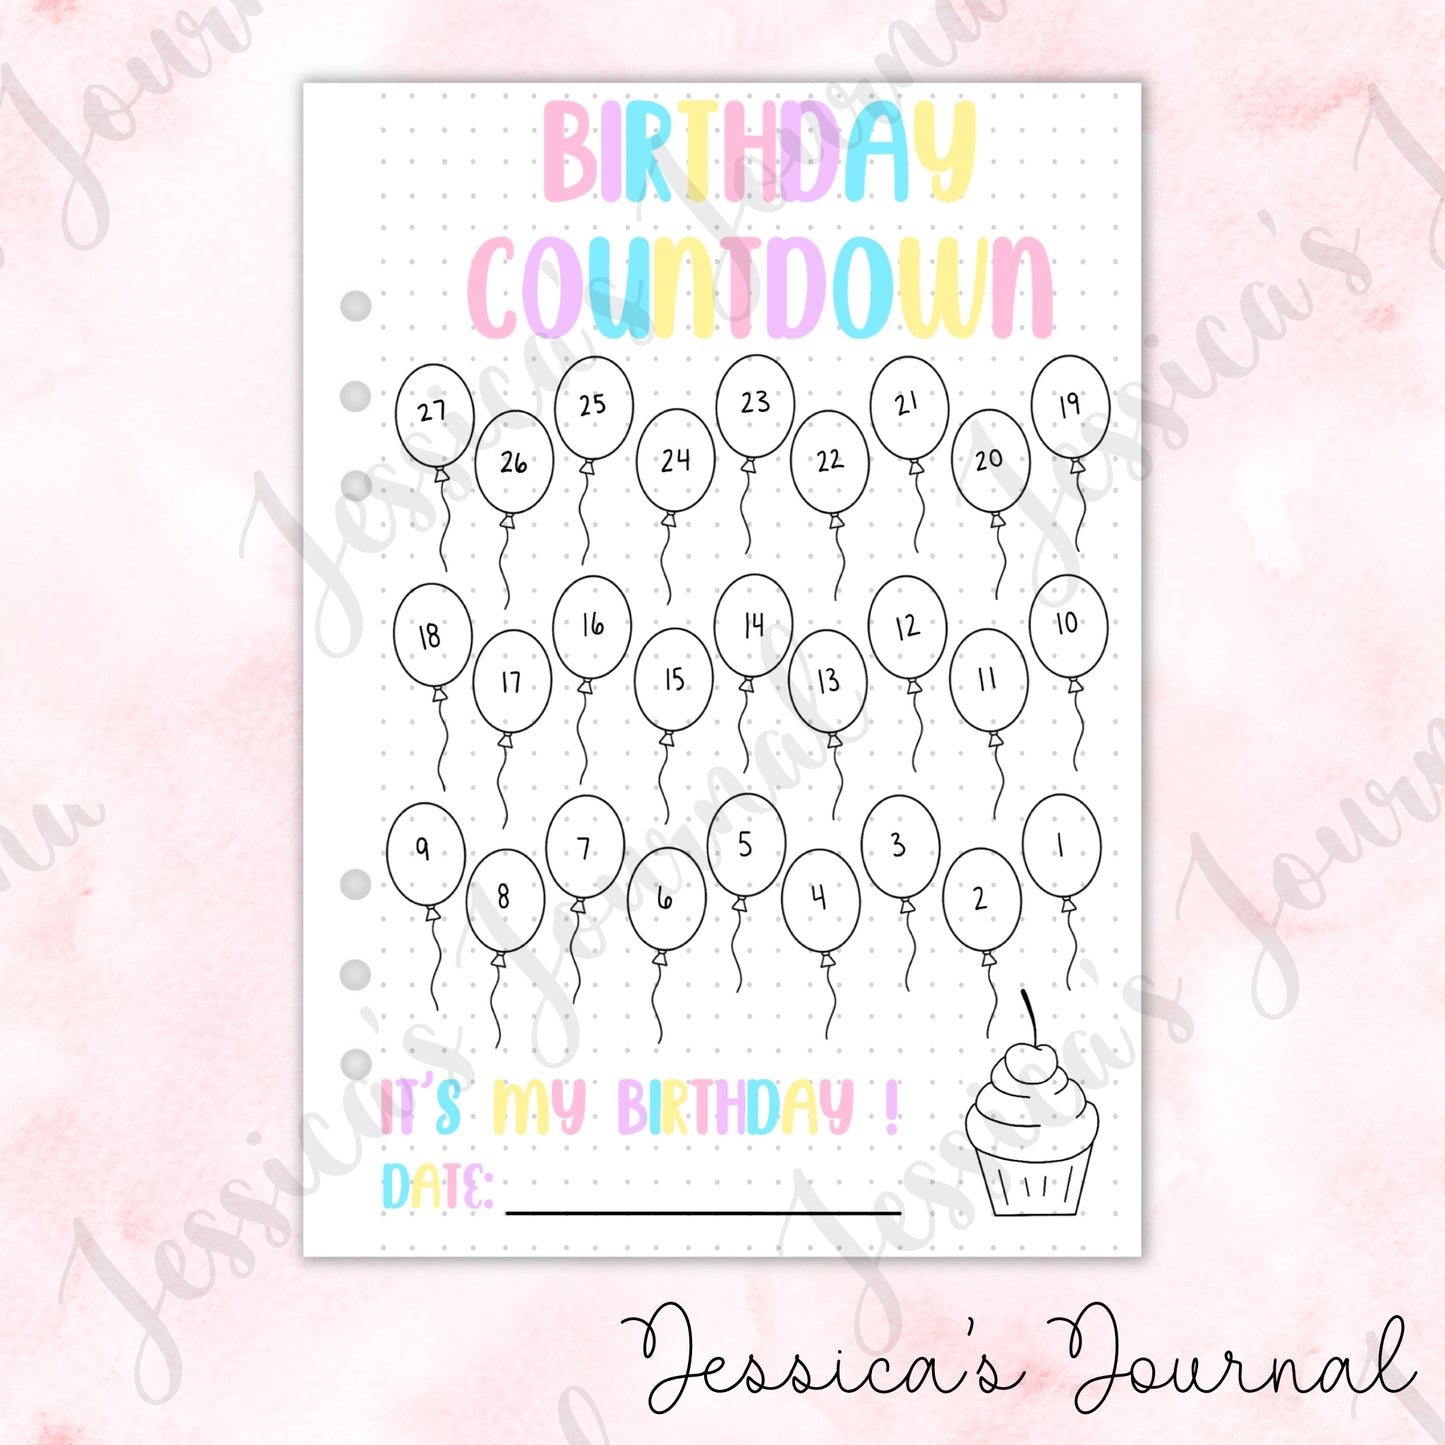 Birthday Countdown | Journal Spread